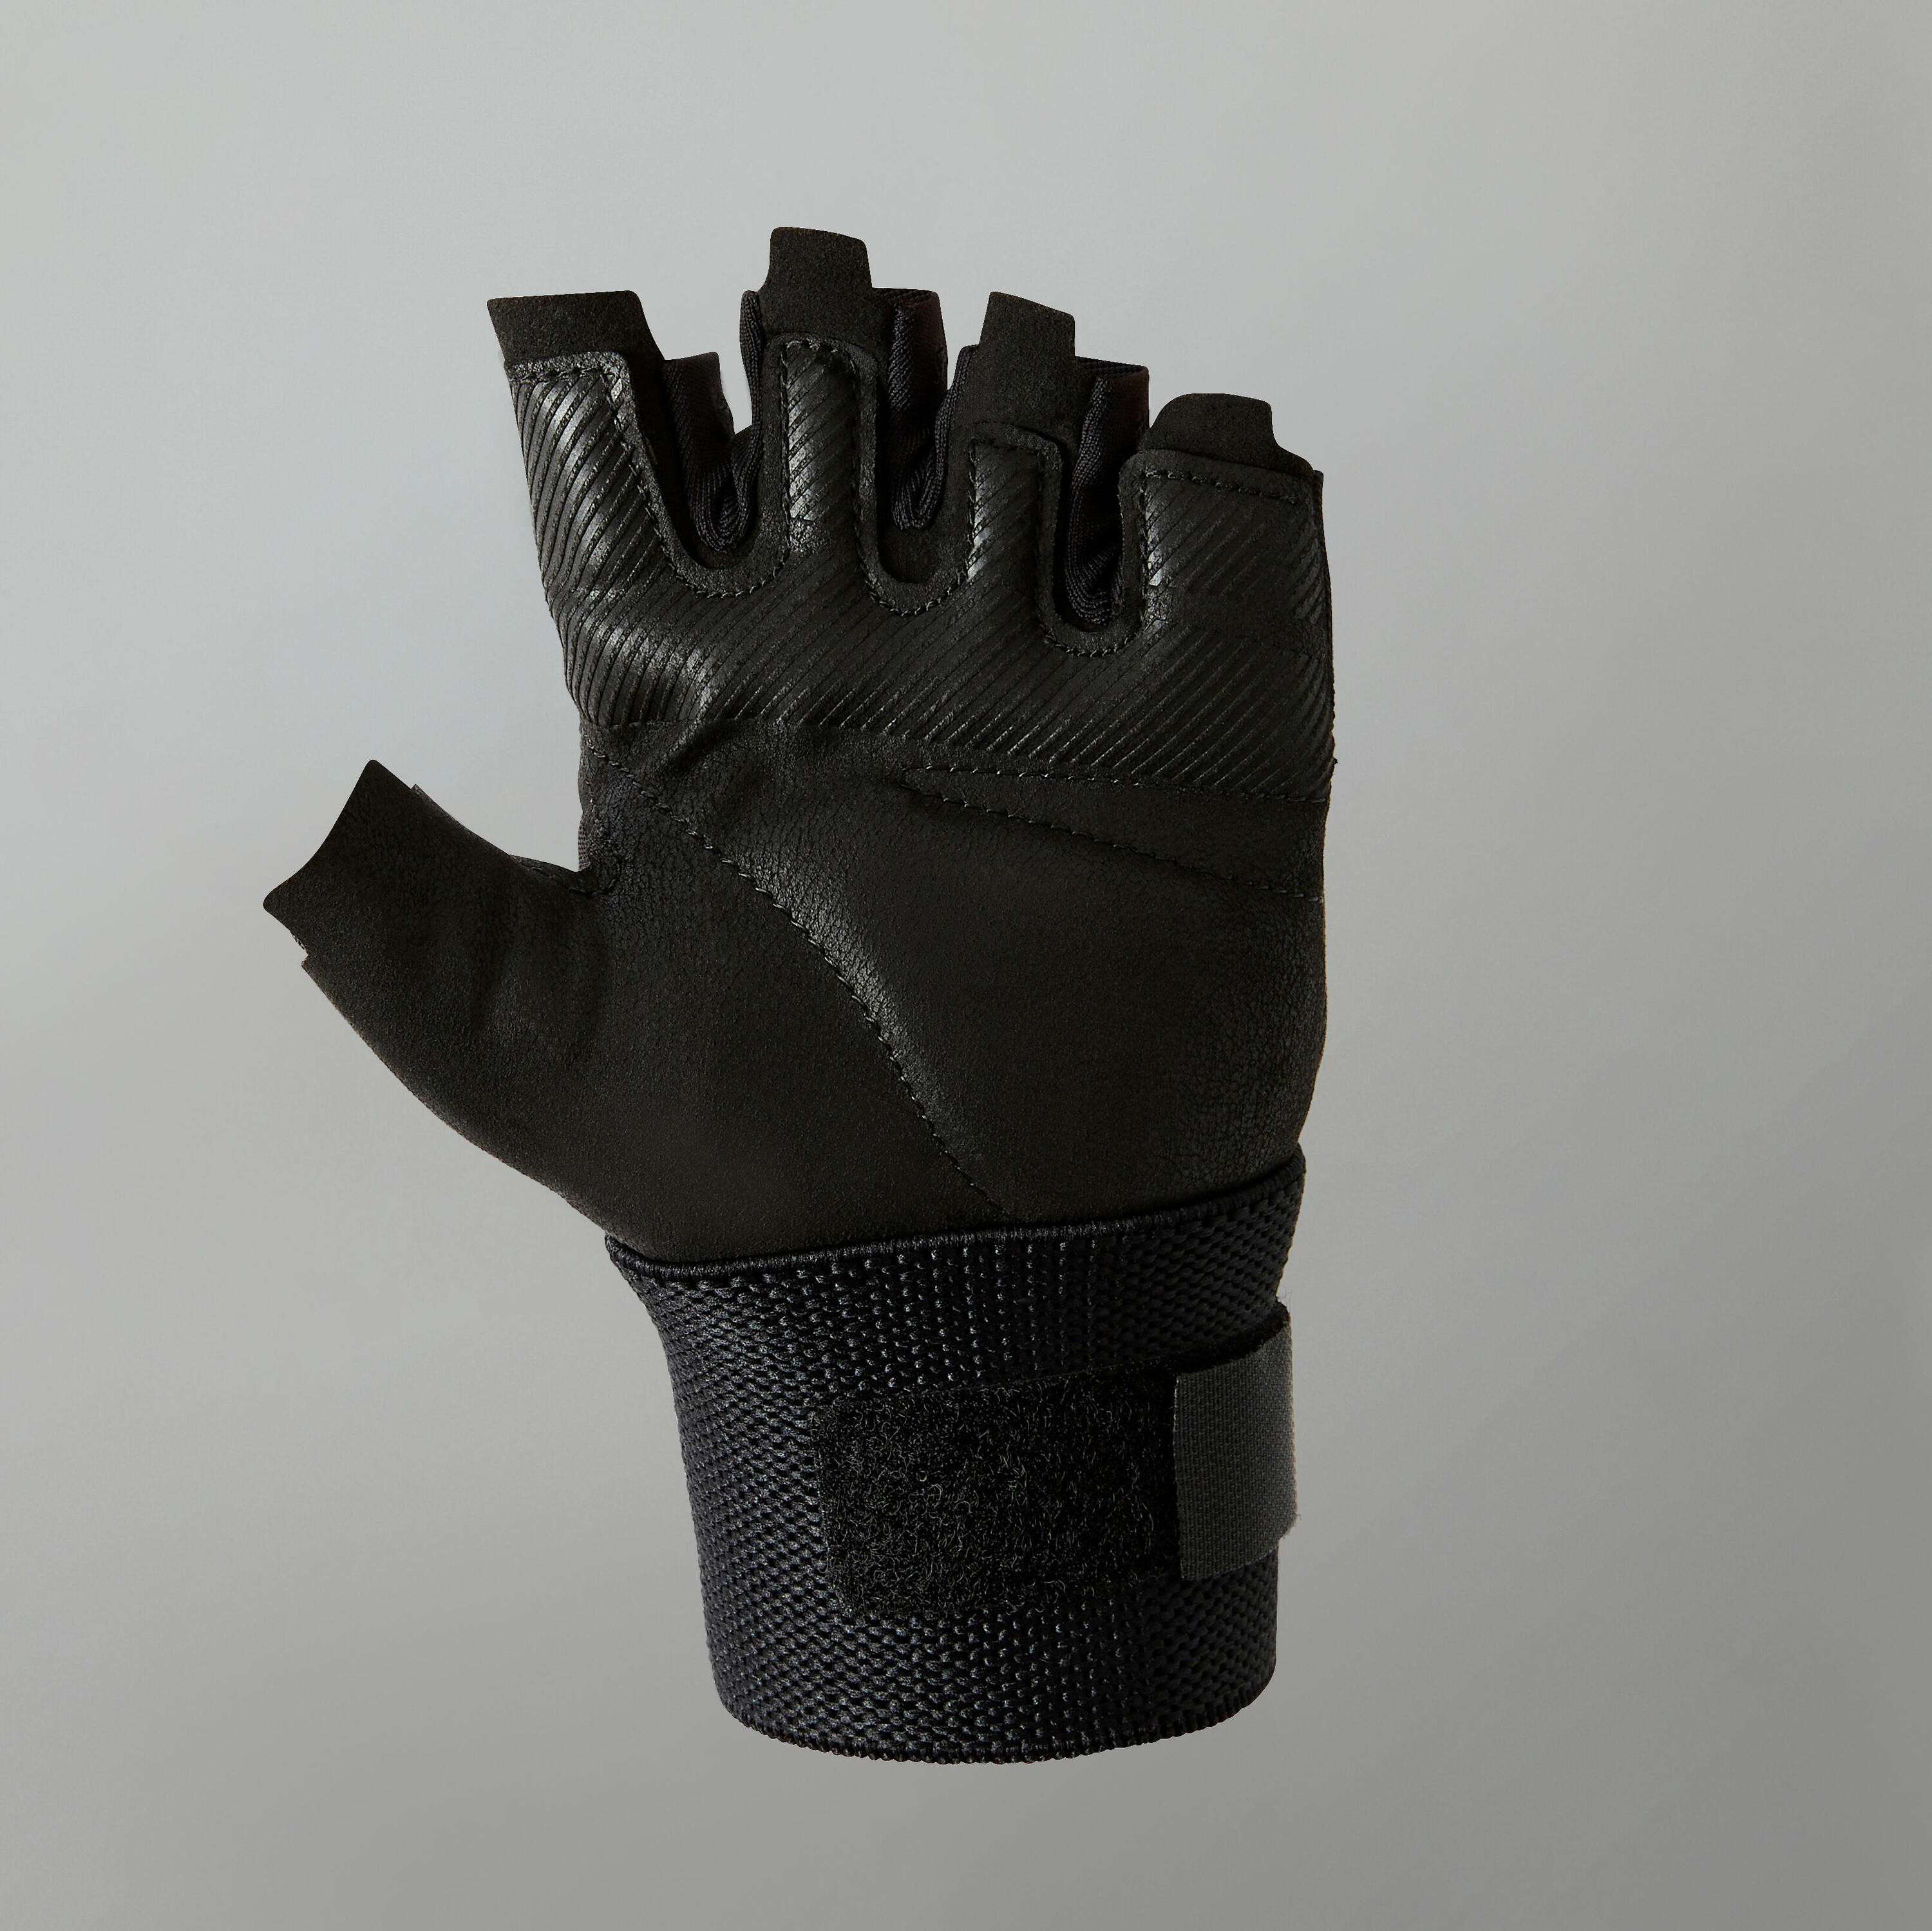 Comfort Weight Training Glove with Wrist Strap - Black 5/5